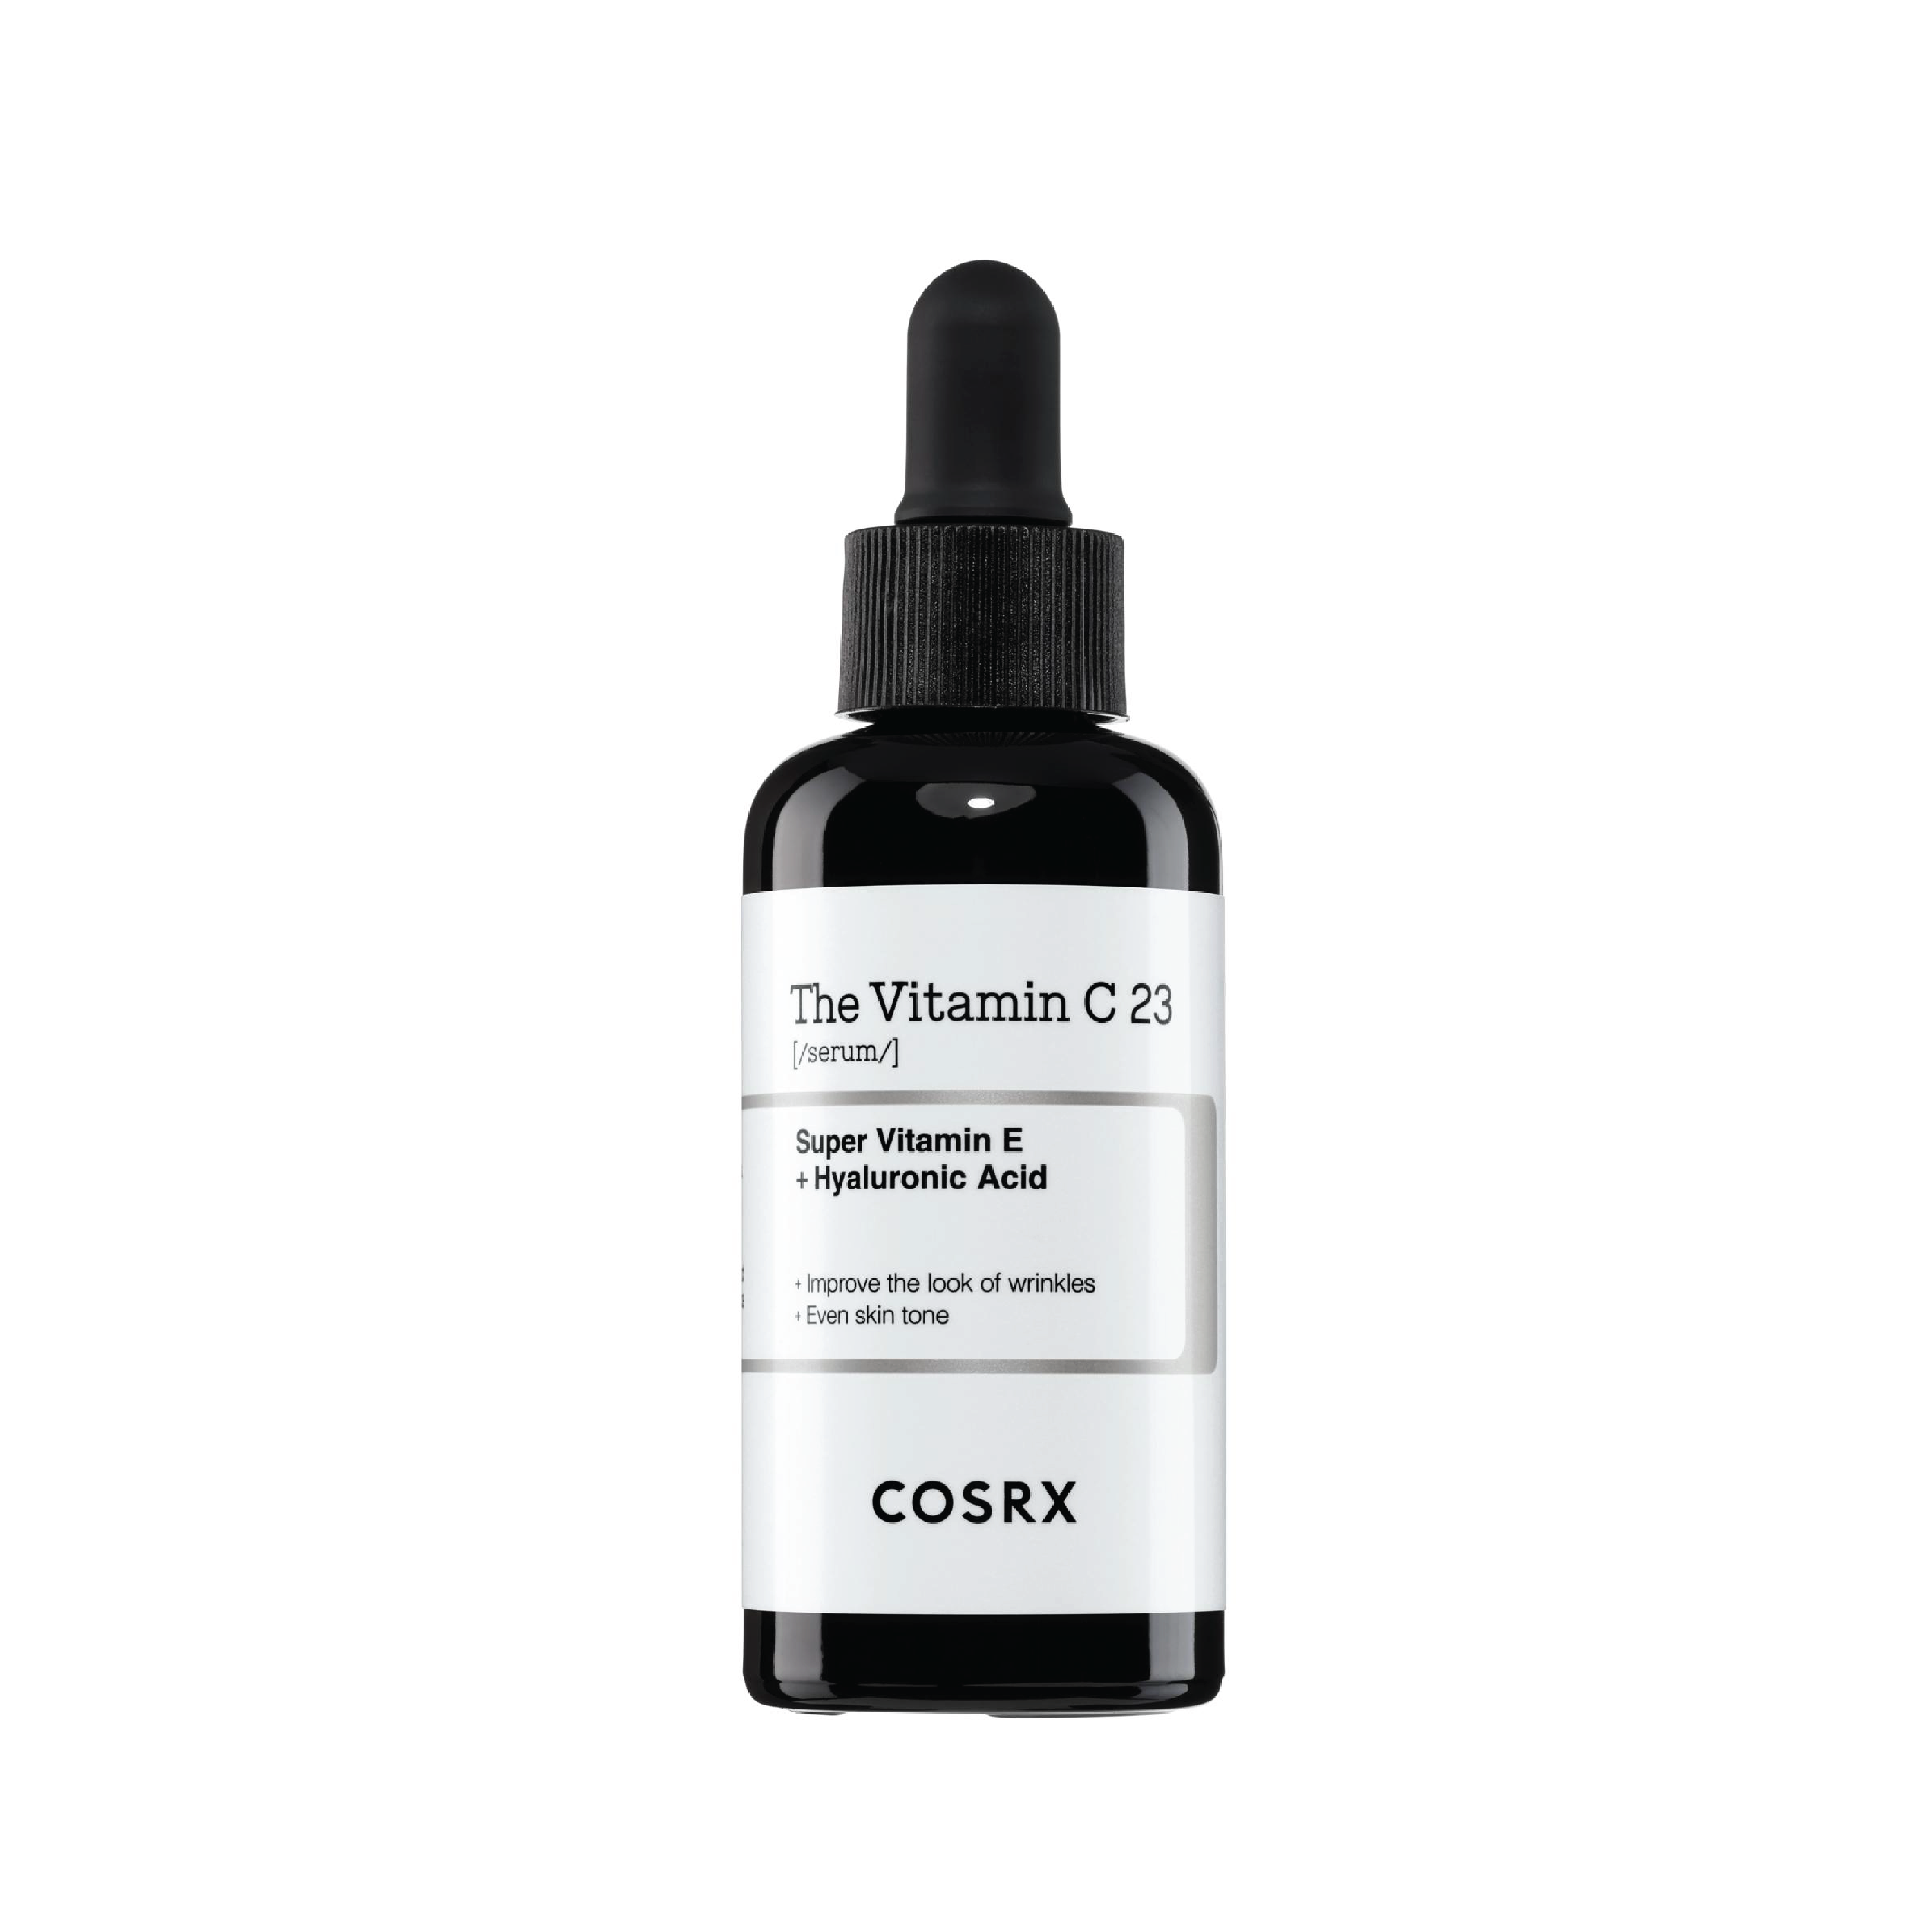 COSRX The Vitamin C 23 Serum, 20 ml